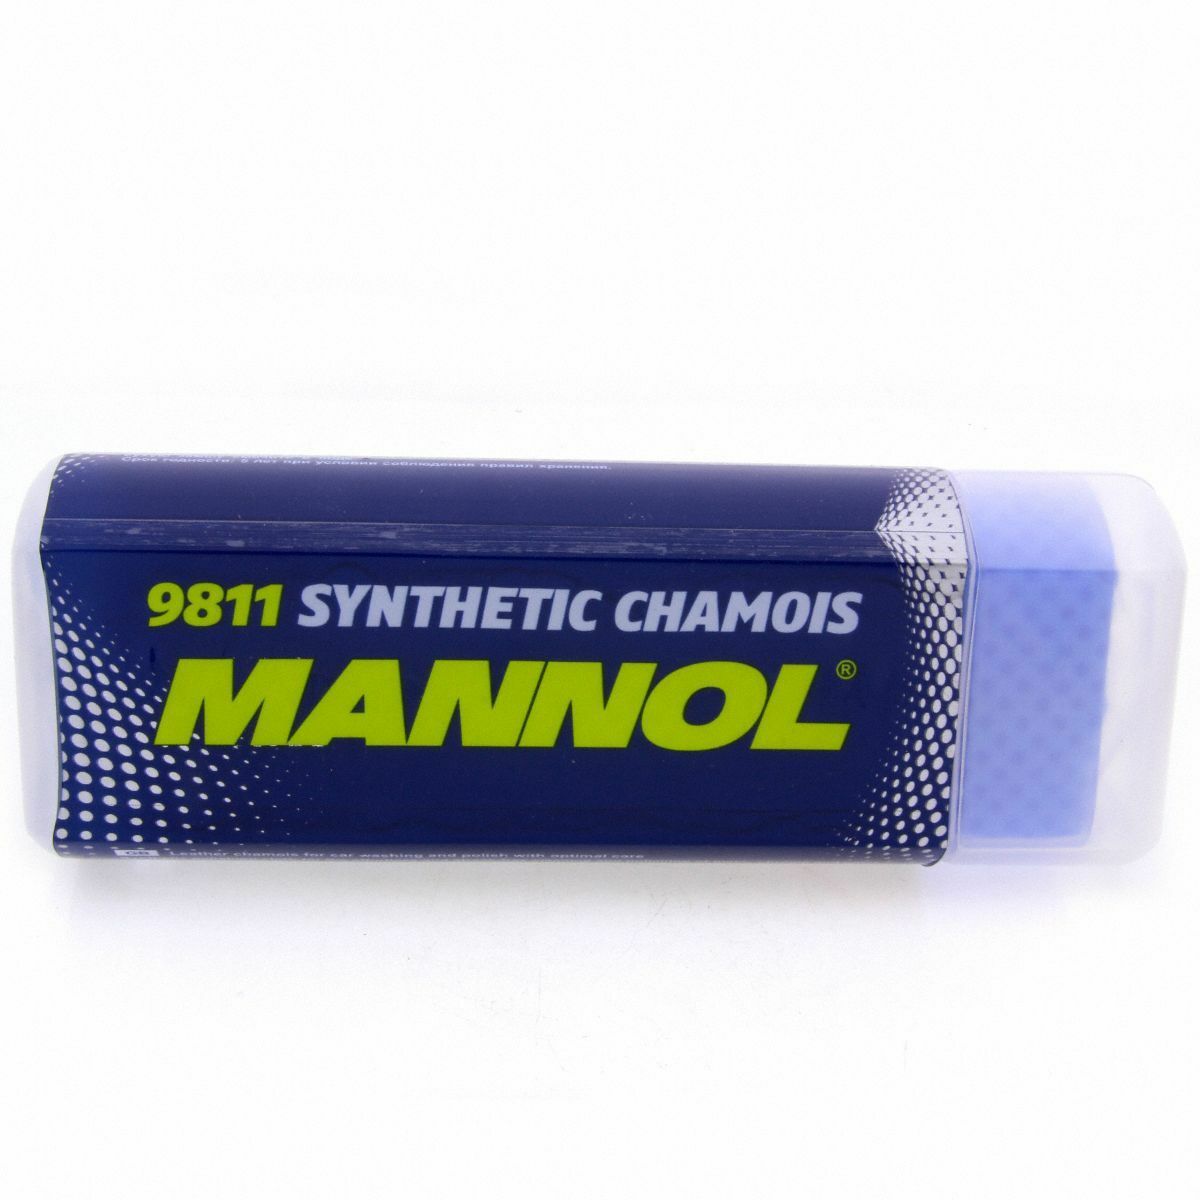 MANNOL 9811 Synthetic Chamois Gämse Kunstledertuch Politur Reinigung